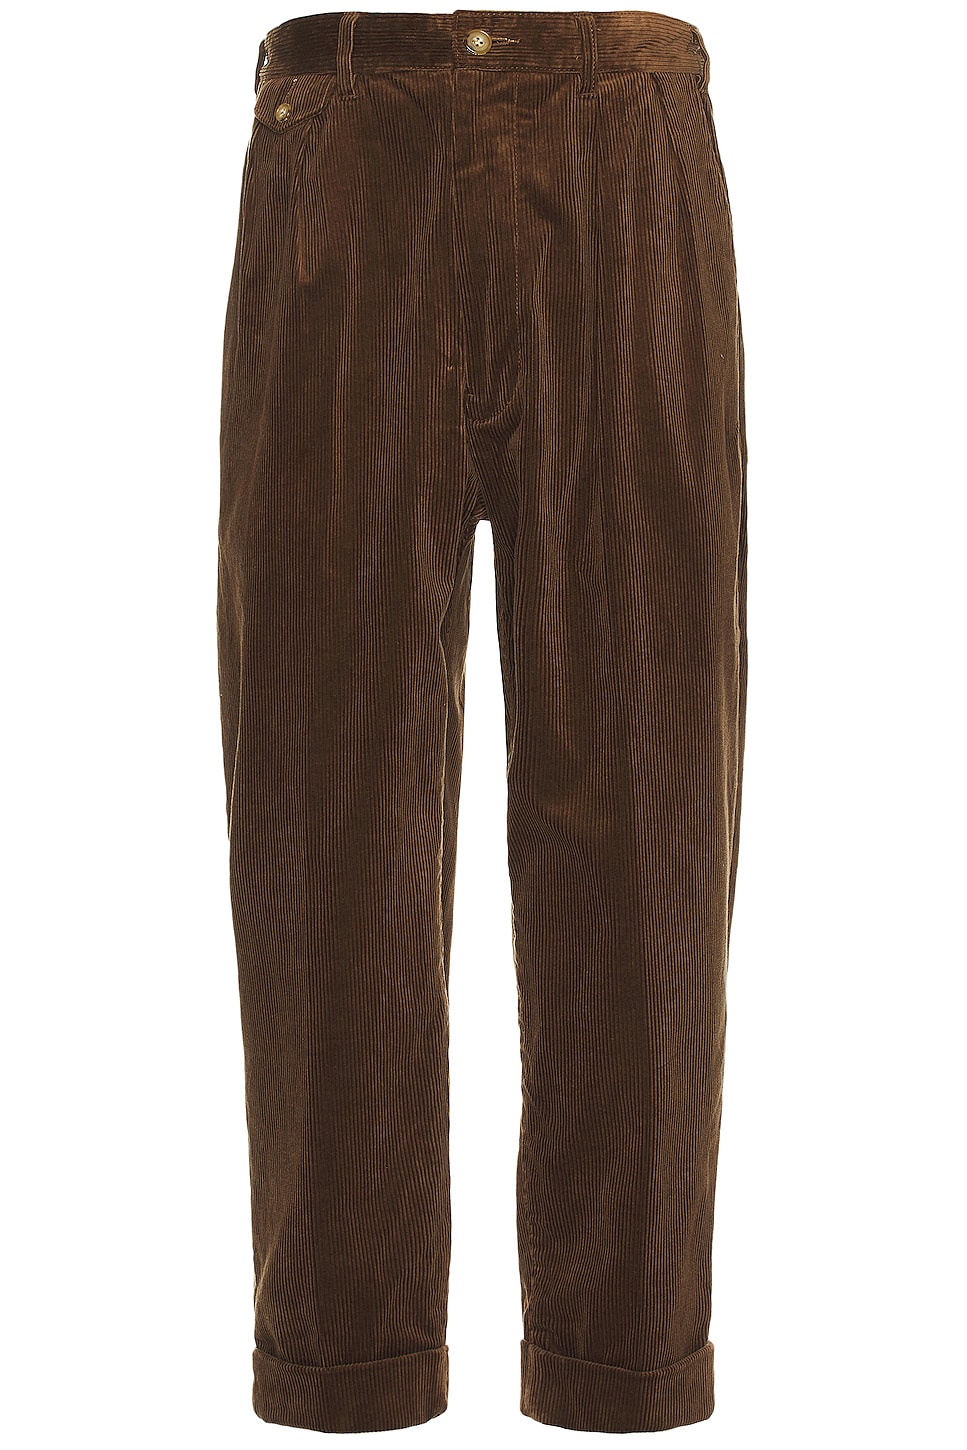 Image 1 of Beams Plus 2 Pleats Corduroy Pant in Golden Brown